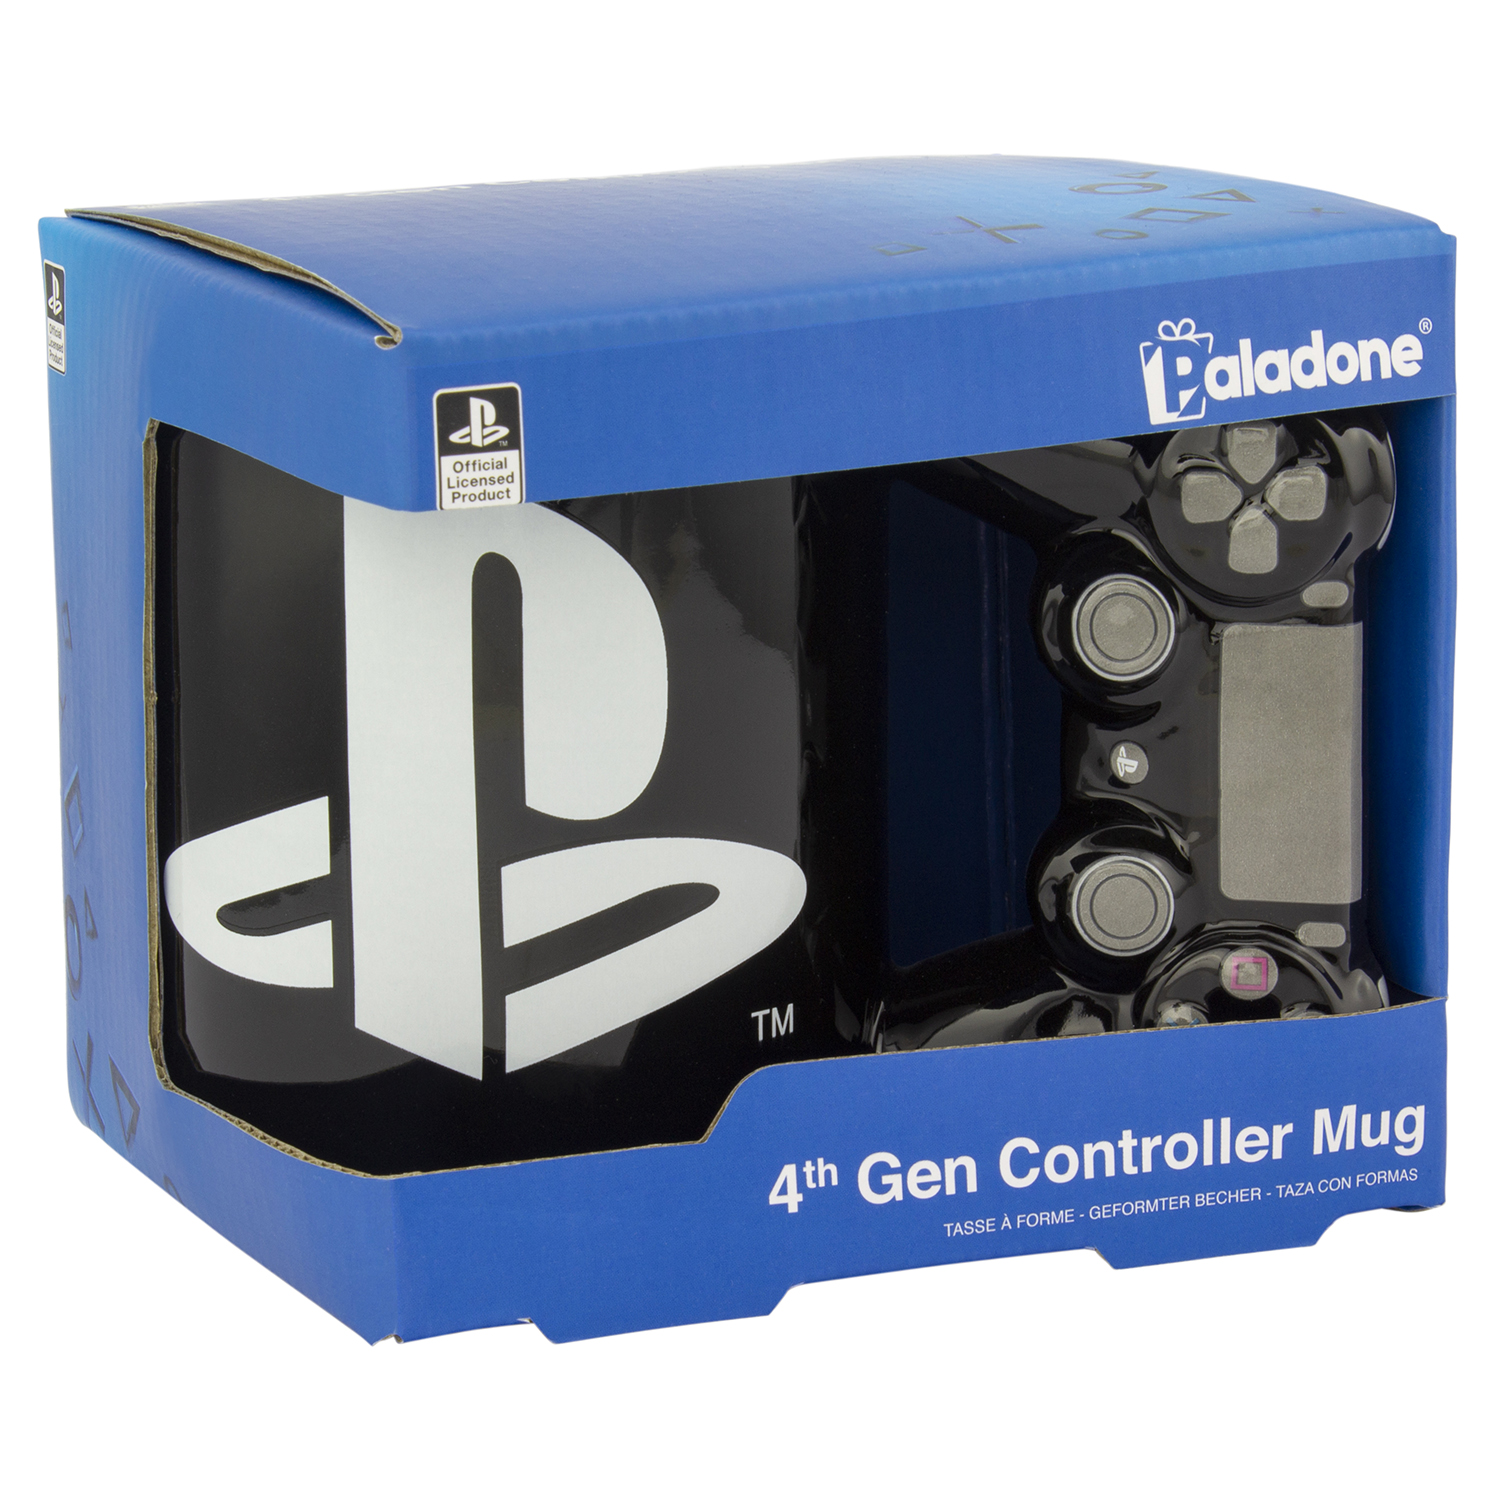 Кружка PALADONE Playstation 4th Gen Controller Mug PP5853PS - фото 2